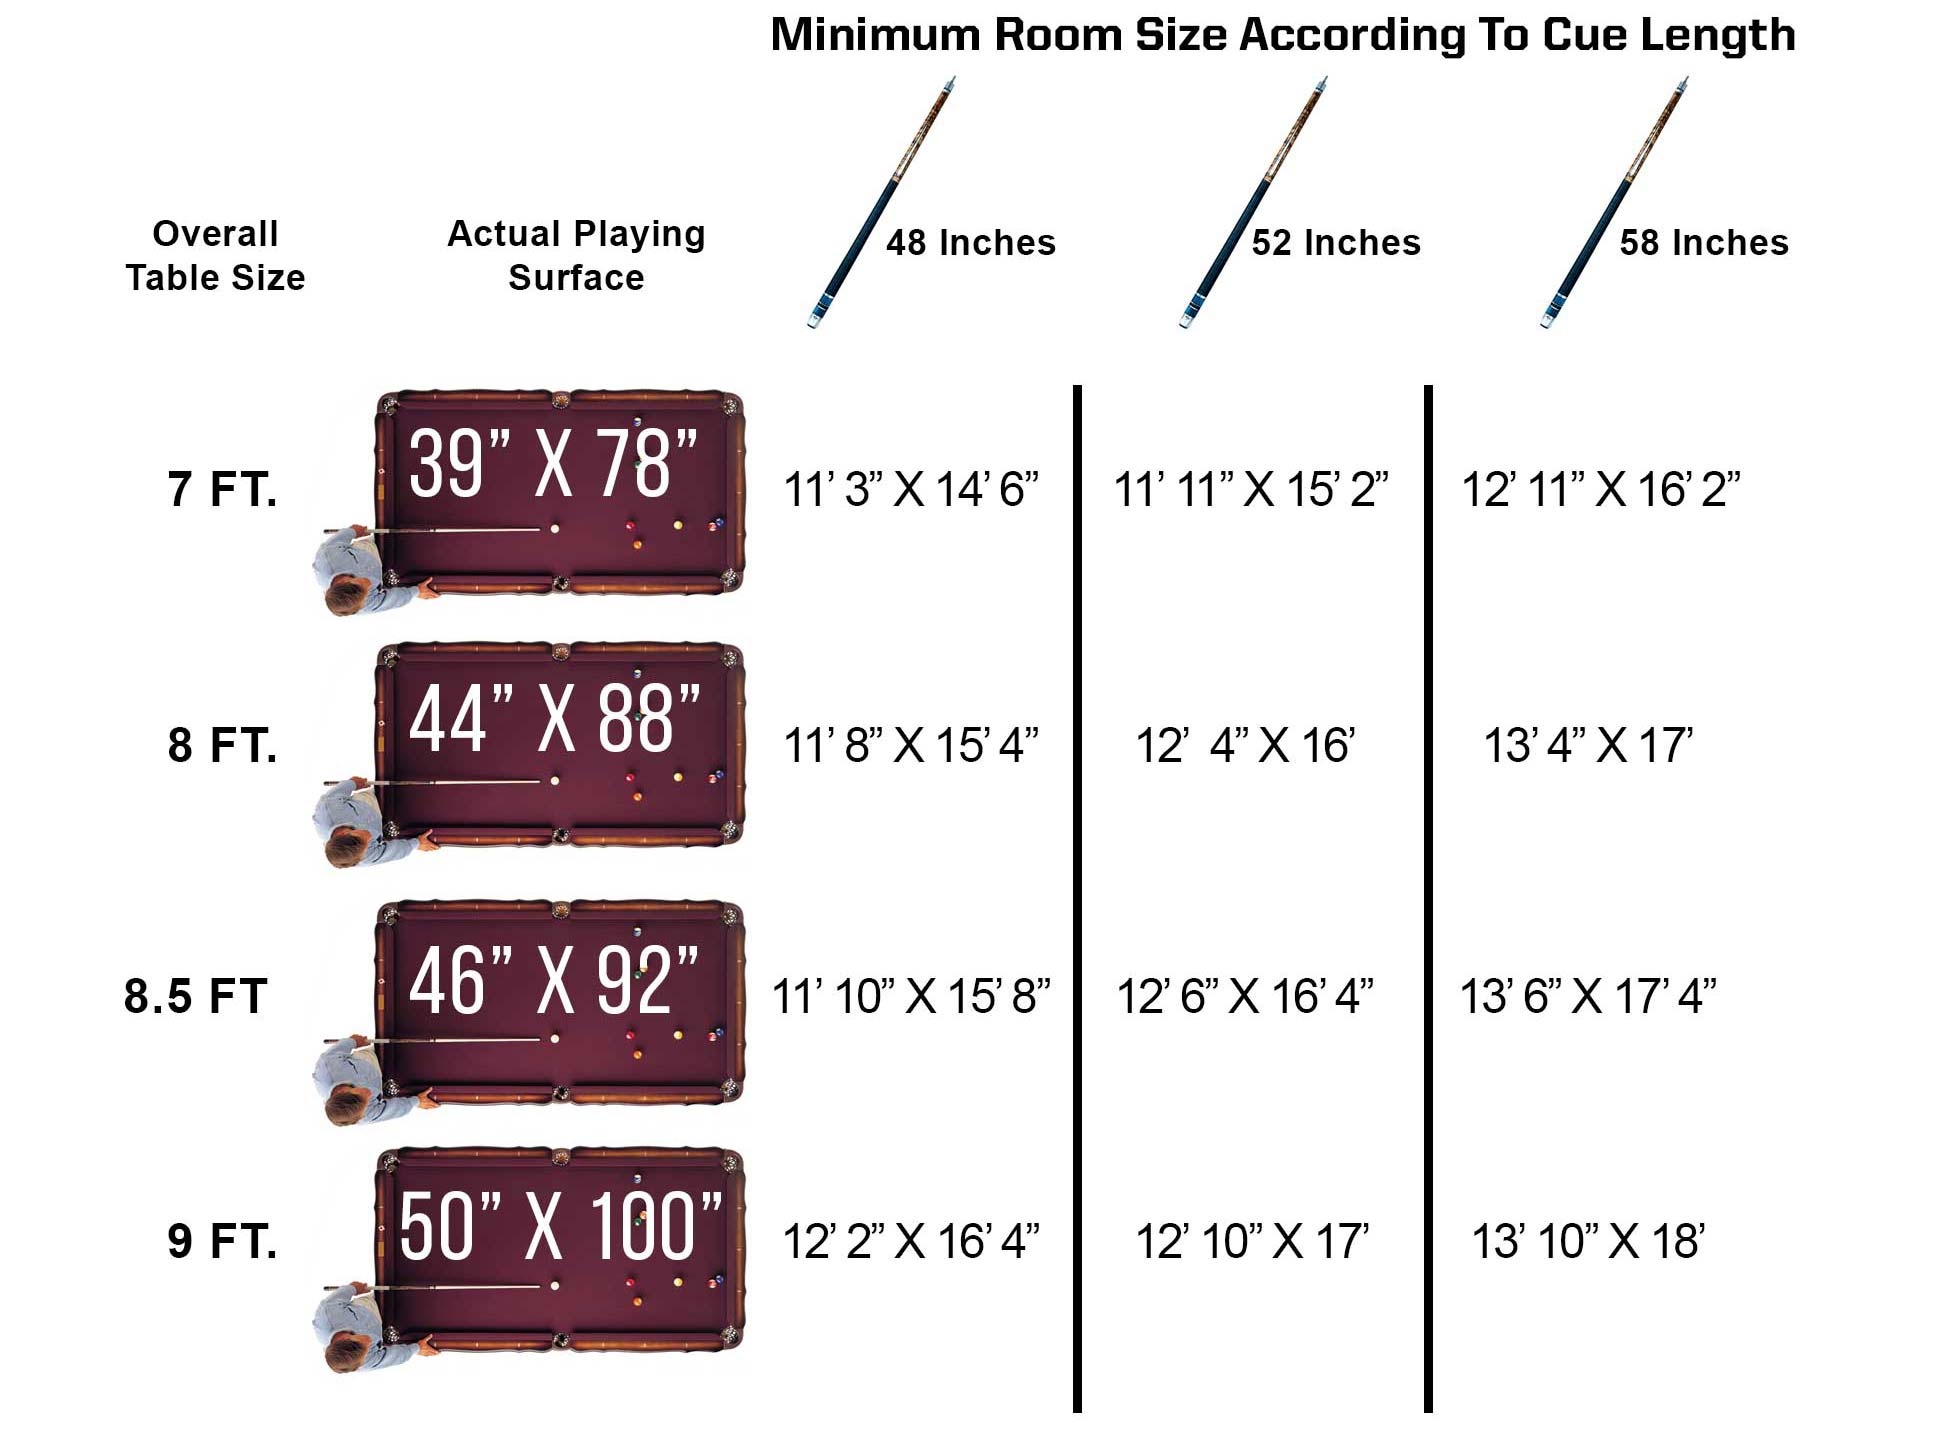 minimum room size according to cue length